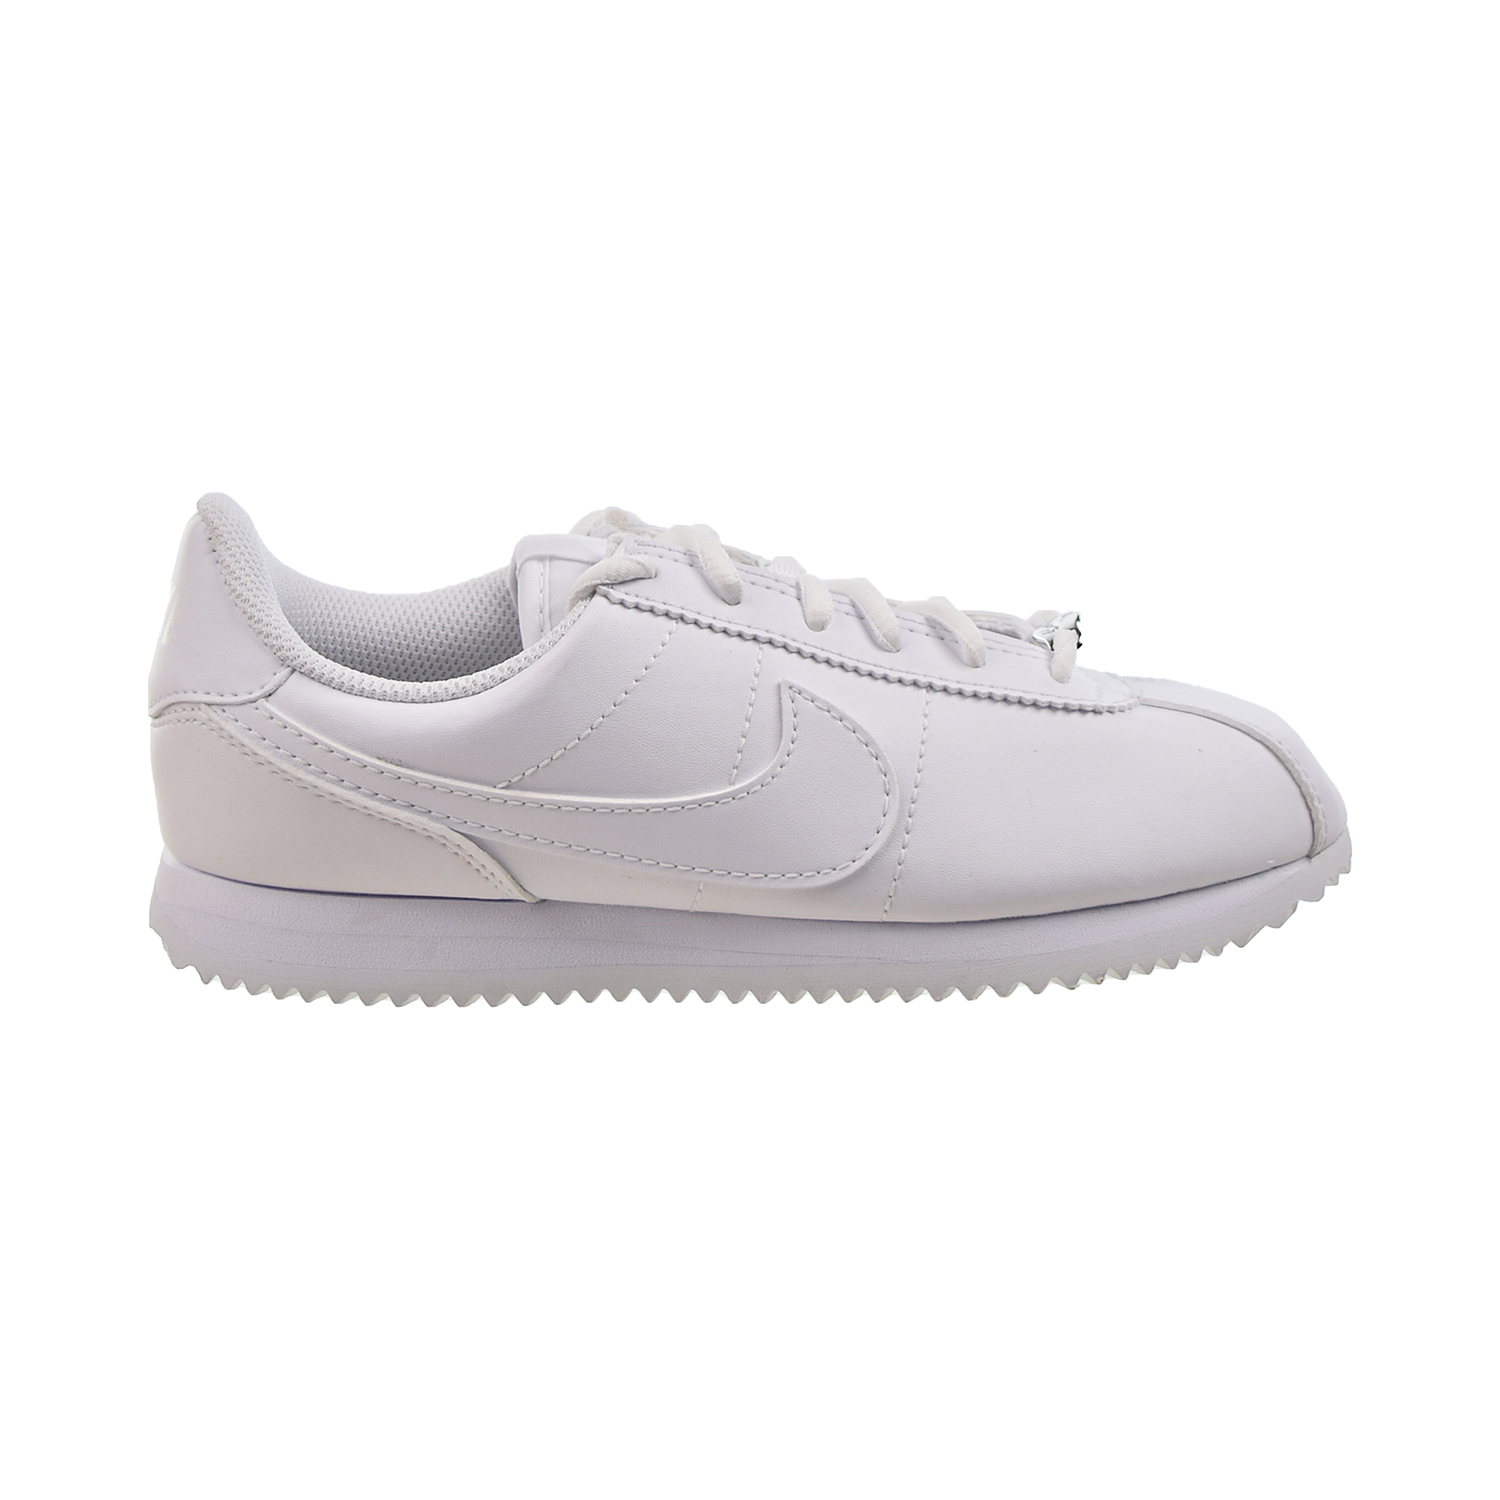 Nike Cortez Basic Leather "Triple White" (GS) Big Kids' Shoes White 904764-100